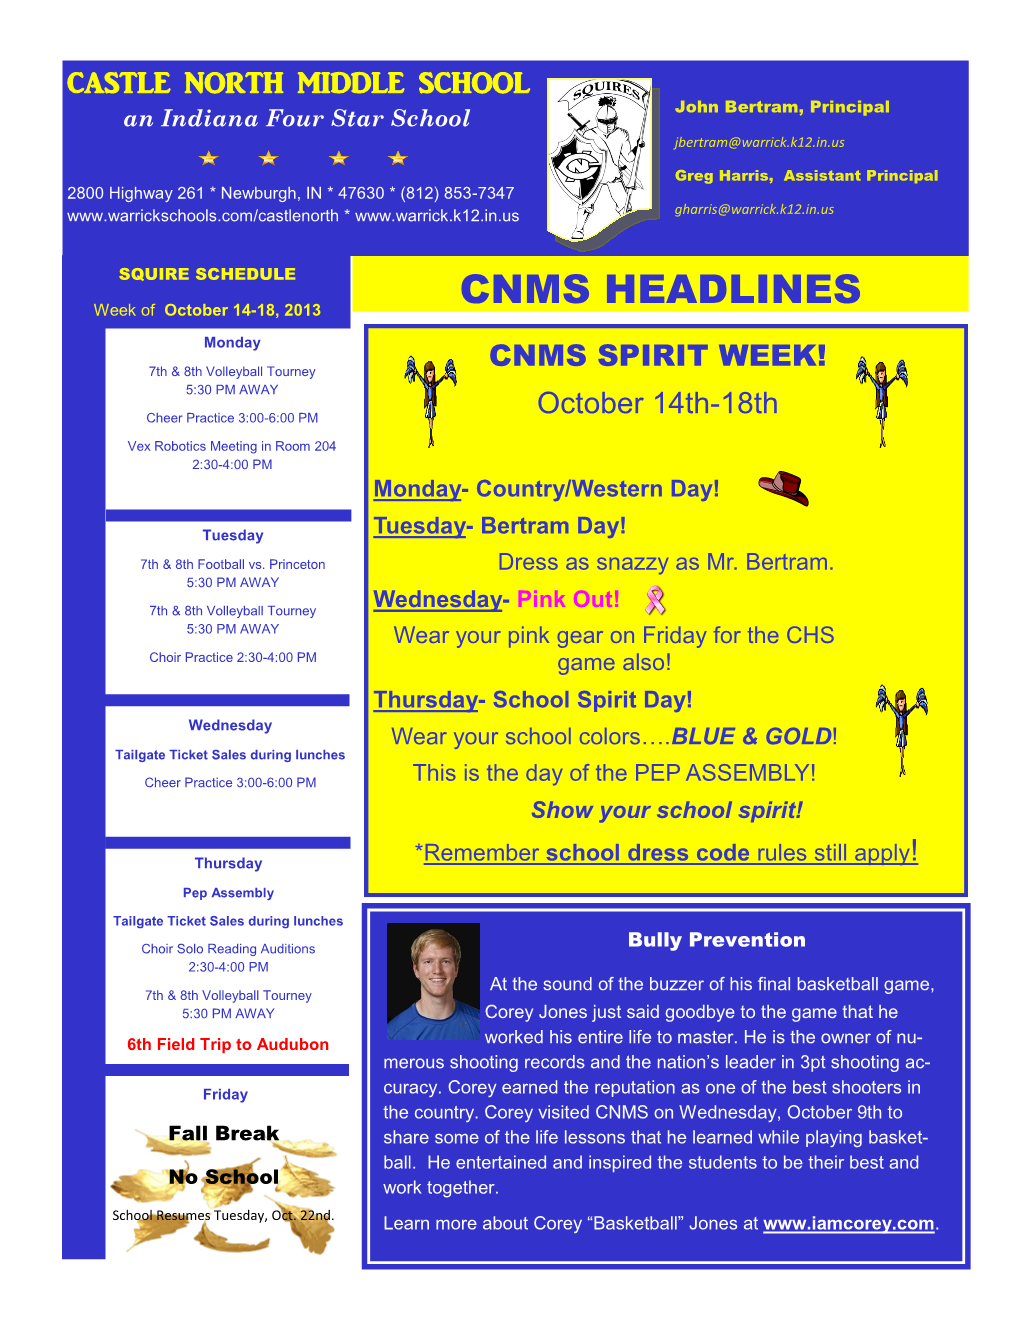 CNMS HEADLINES Week of October 14-18, 2013